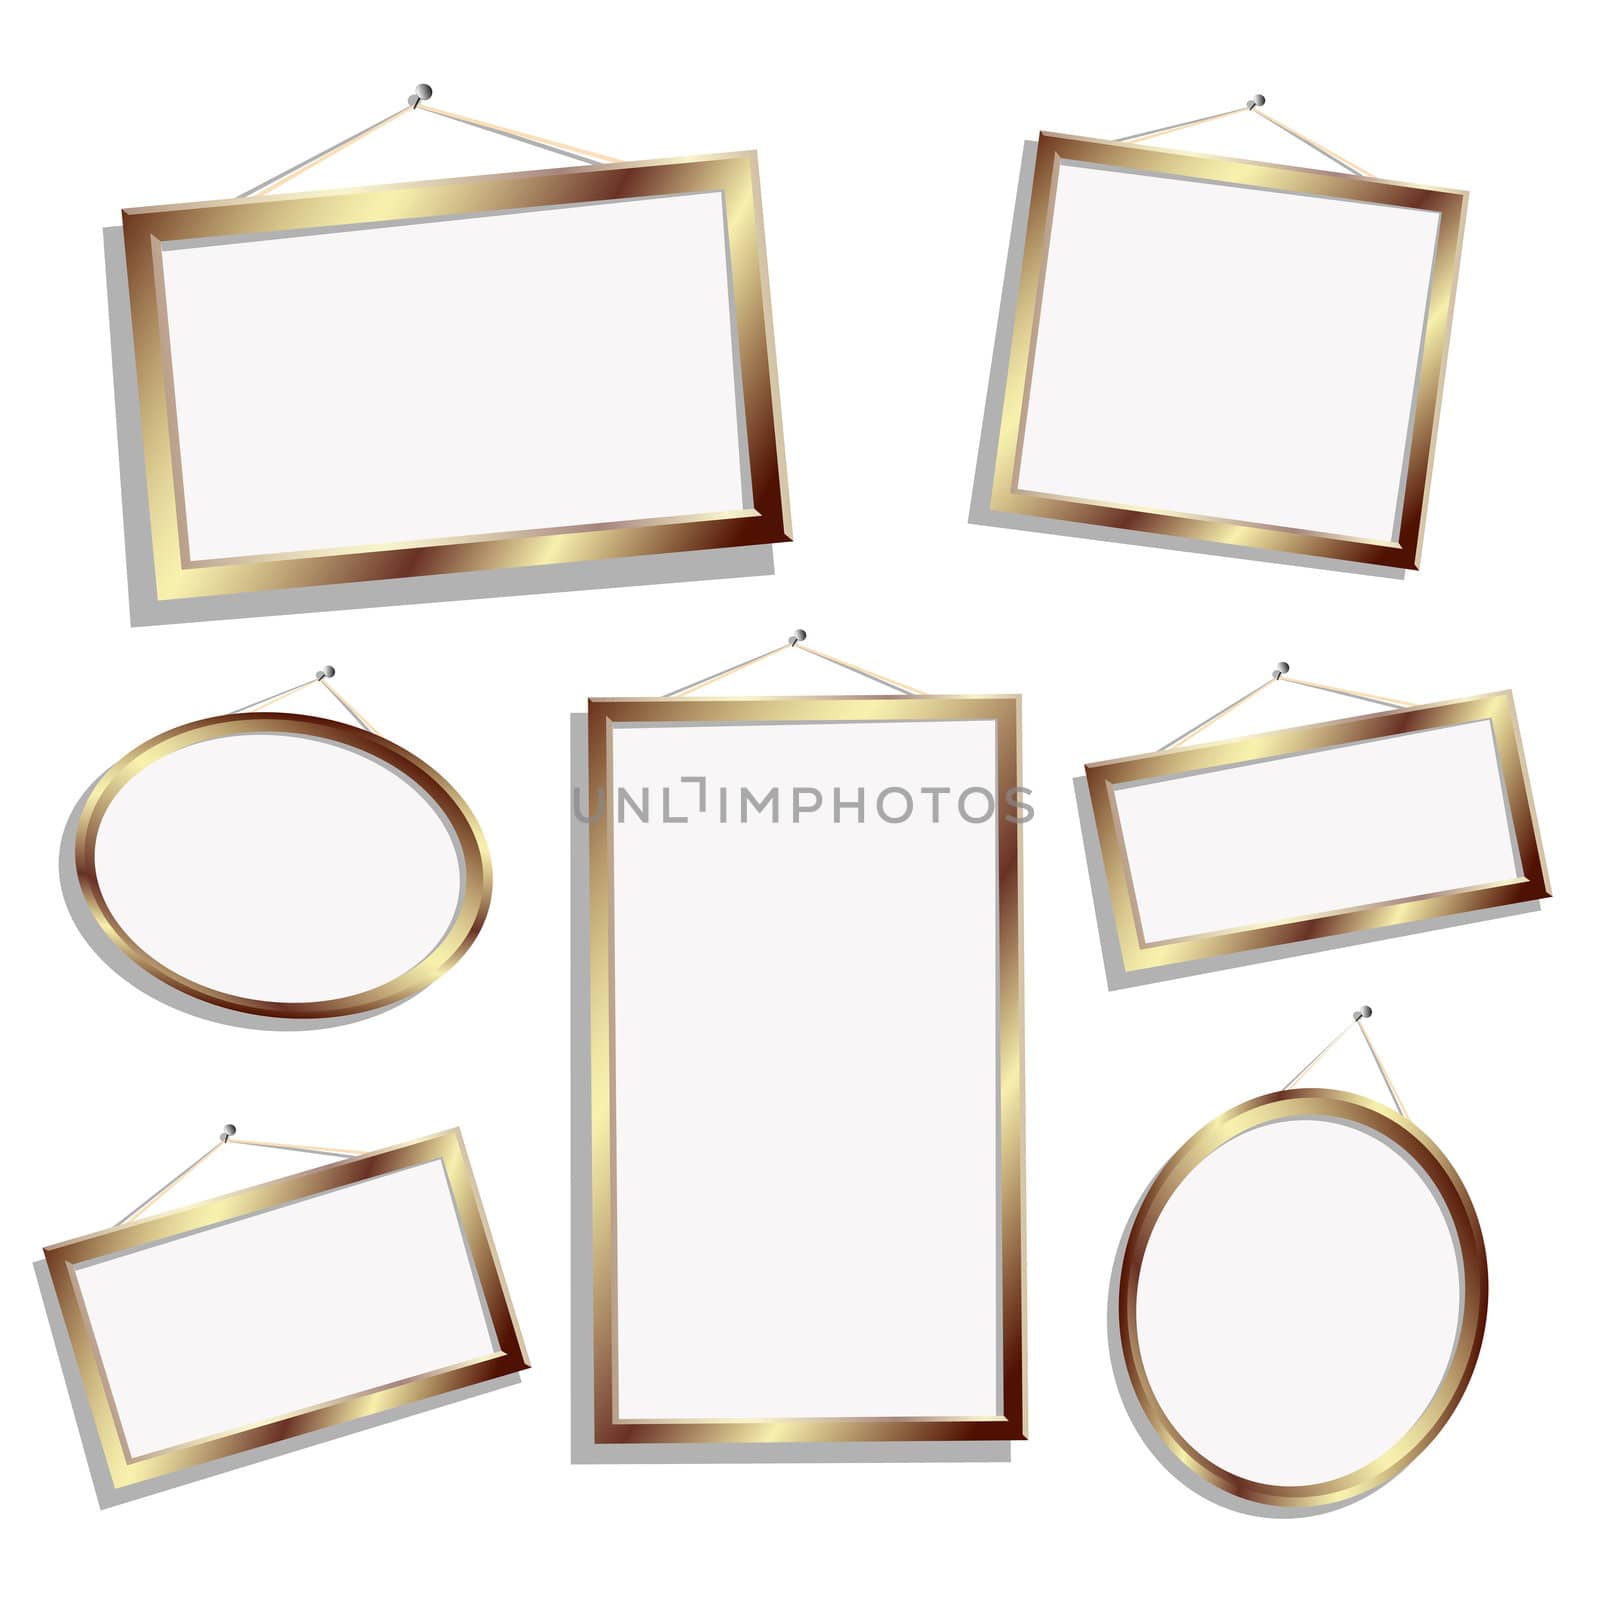 Golden empty frames